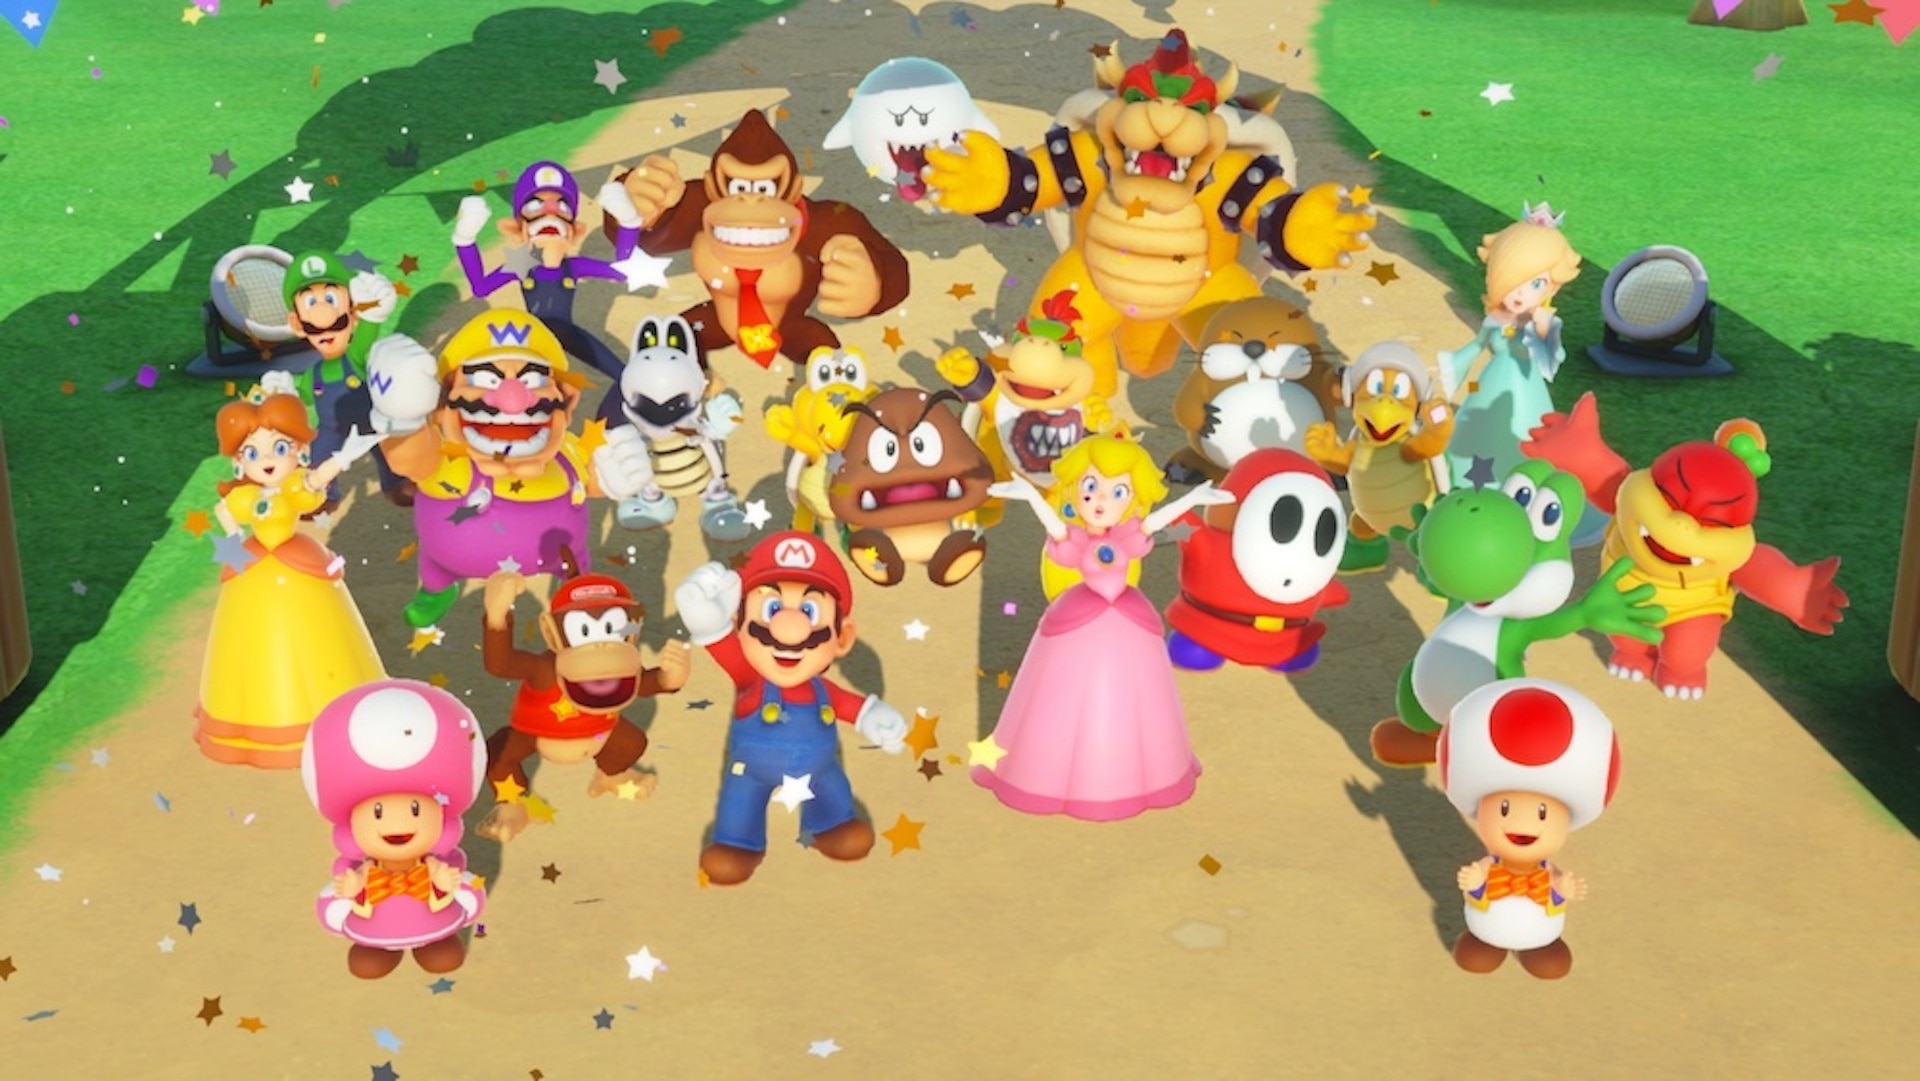 Nintendo® and Illumination present The Super Mario Bros. Movie